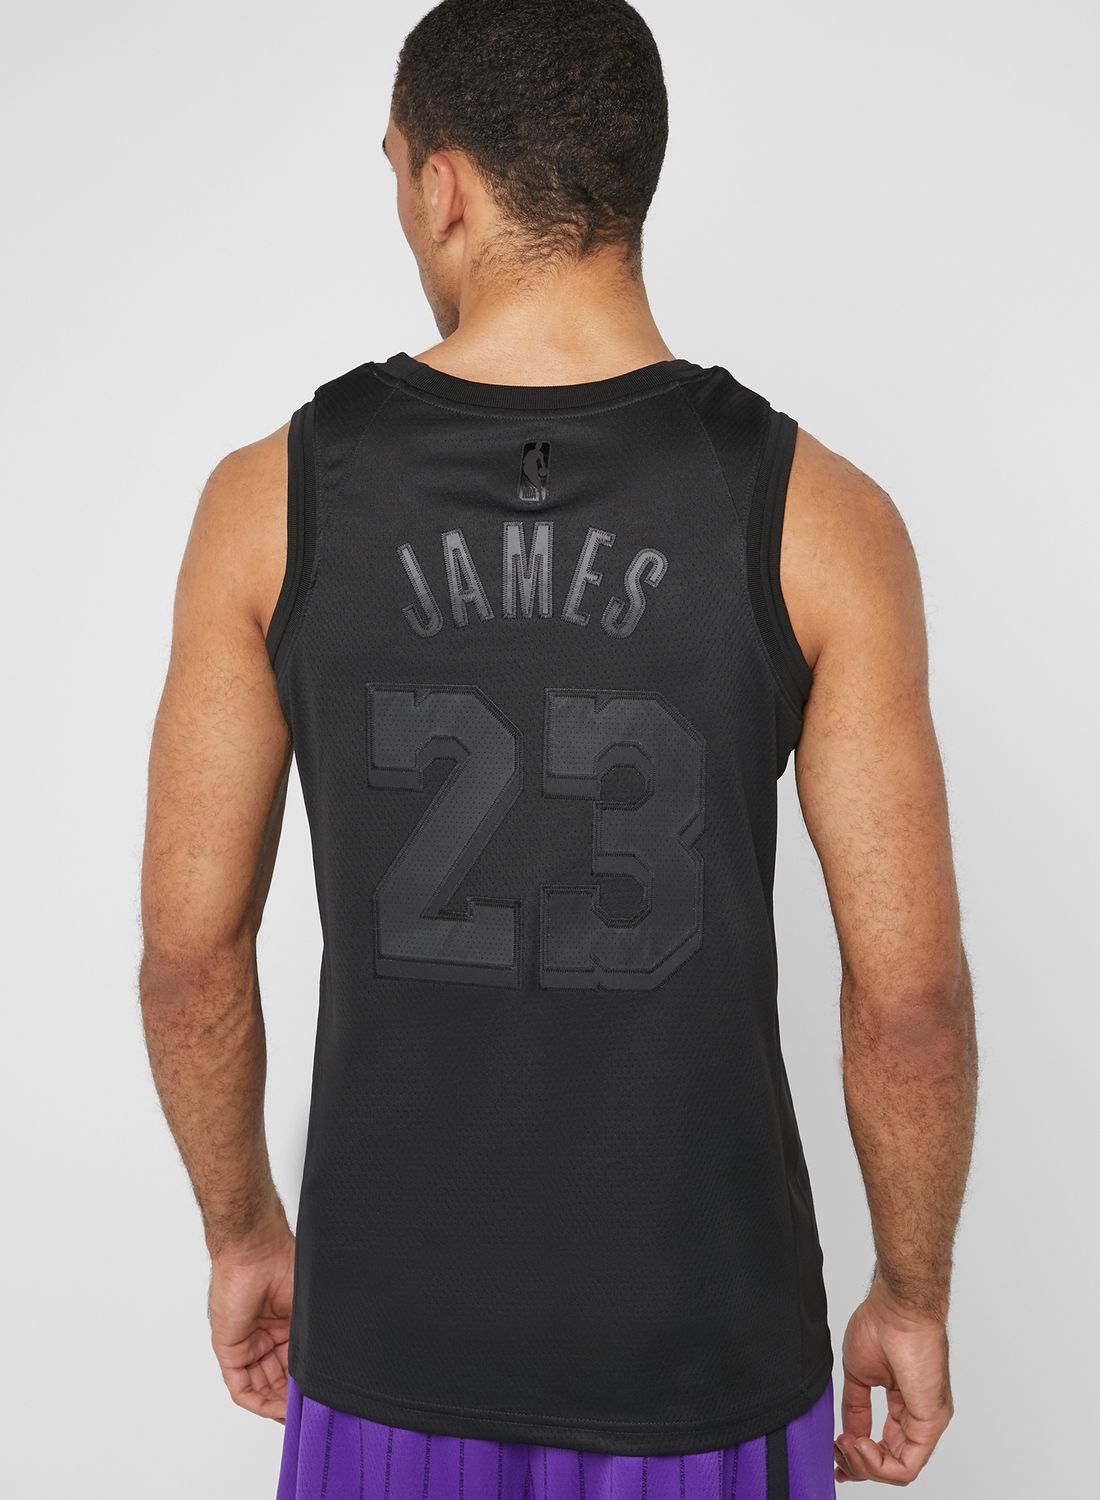 Nike Connected Jersey NBA lakers LeBron James MVP Black CI2030-010